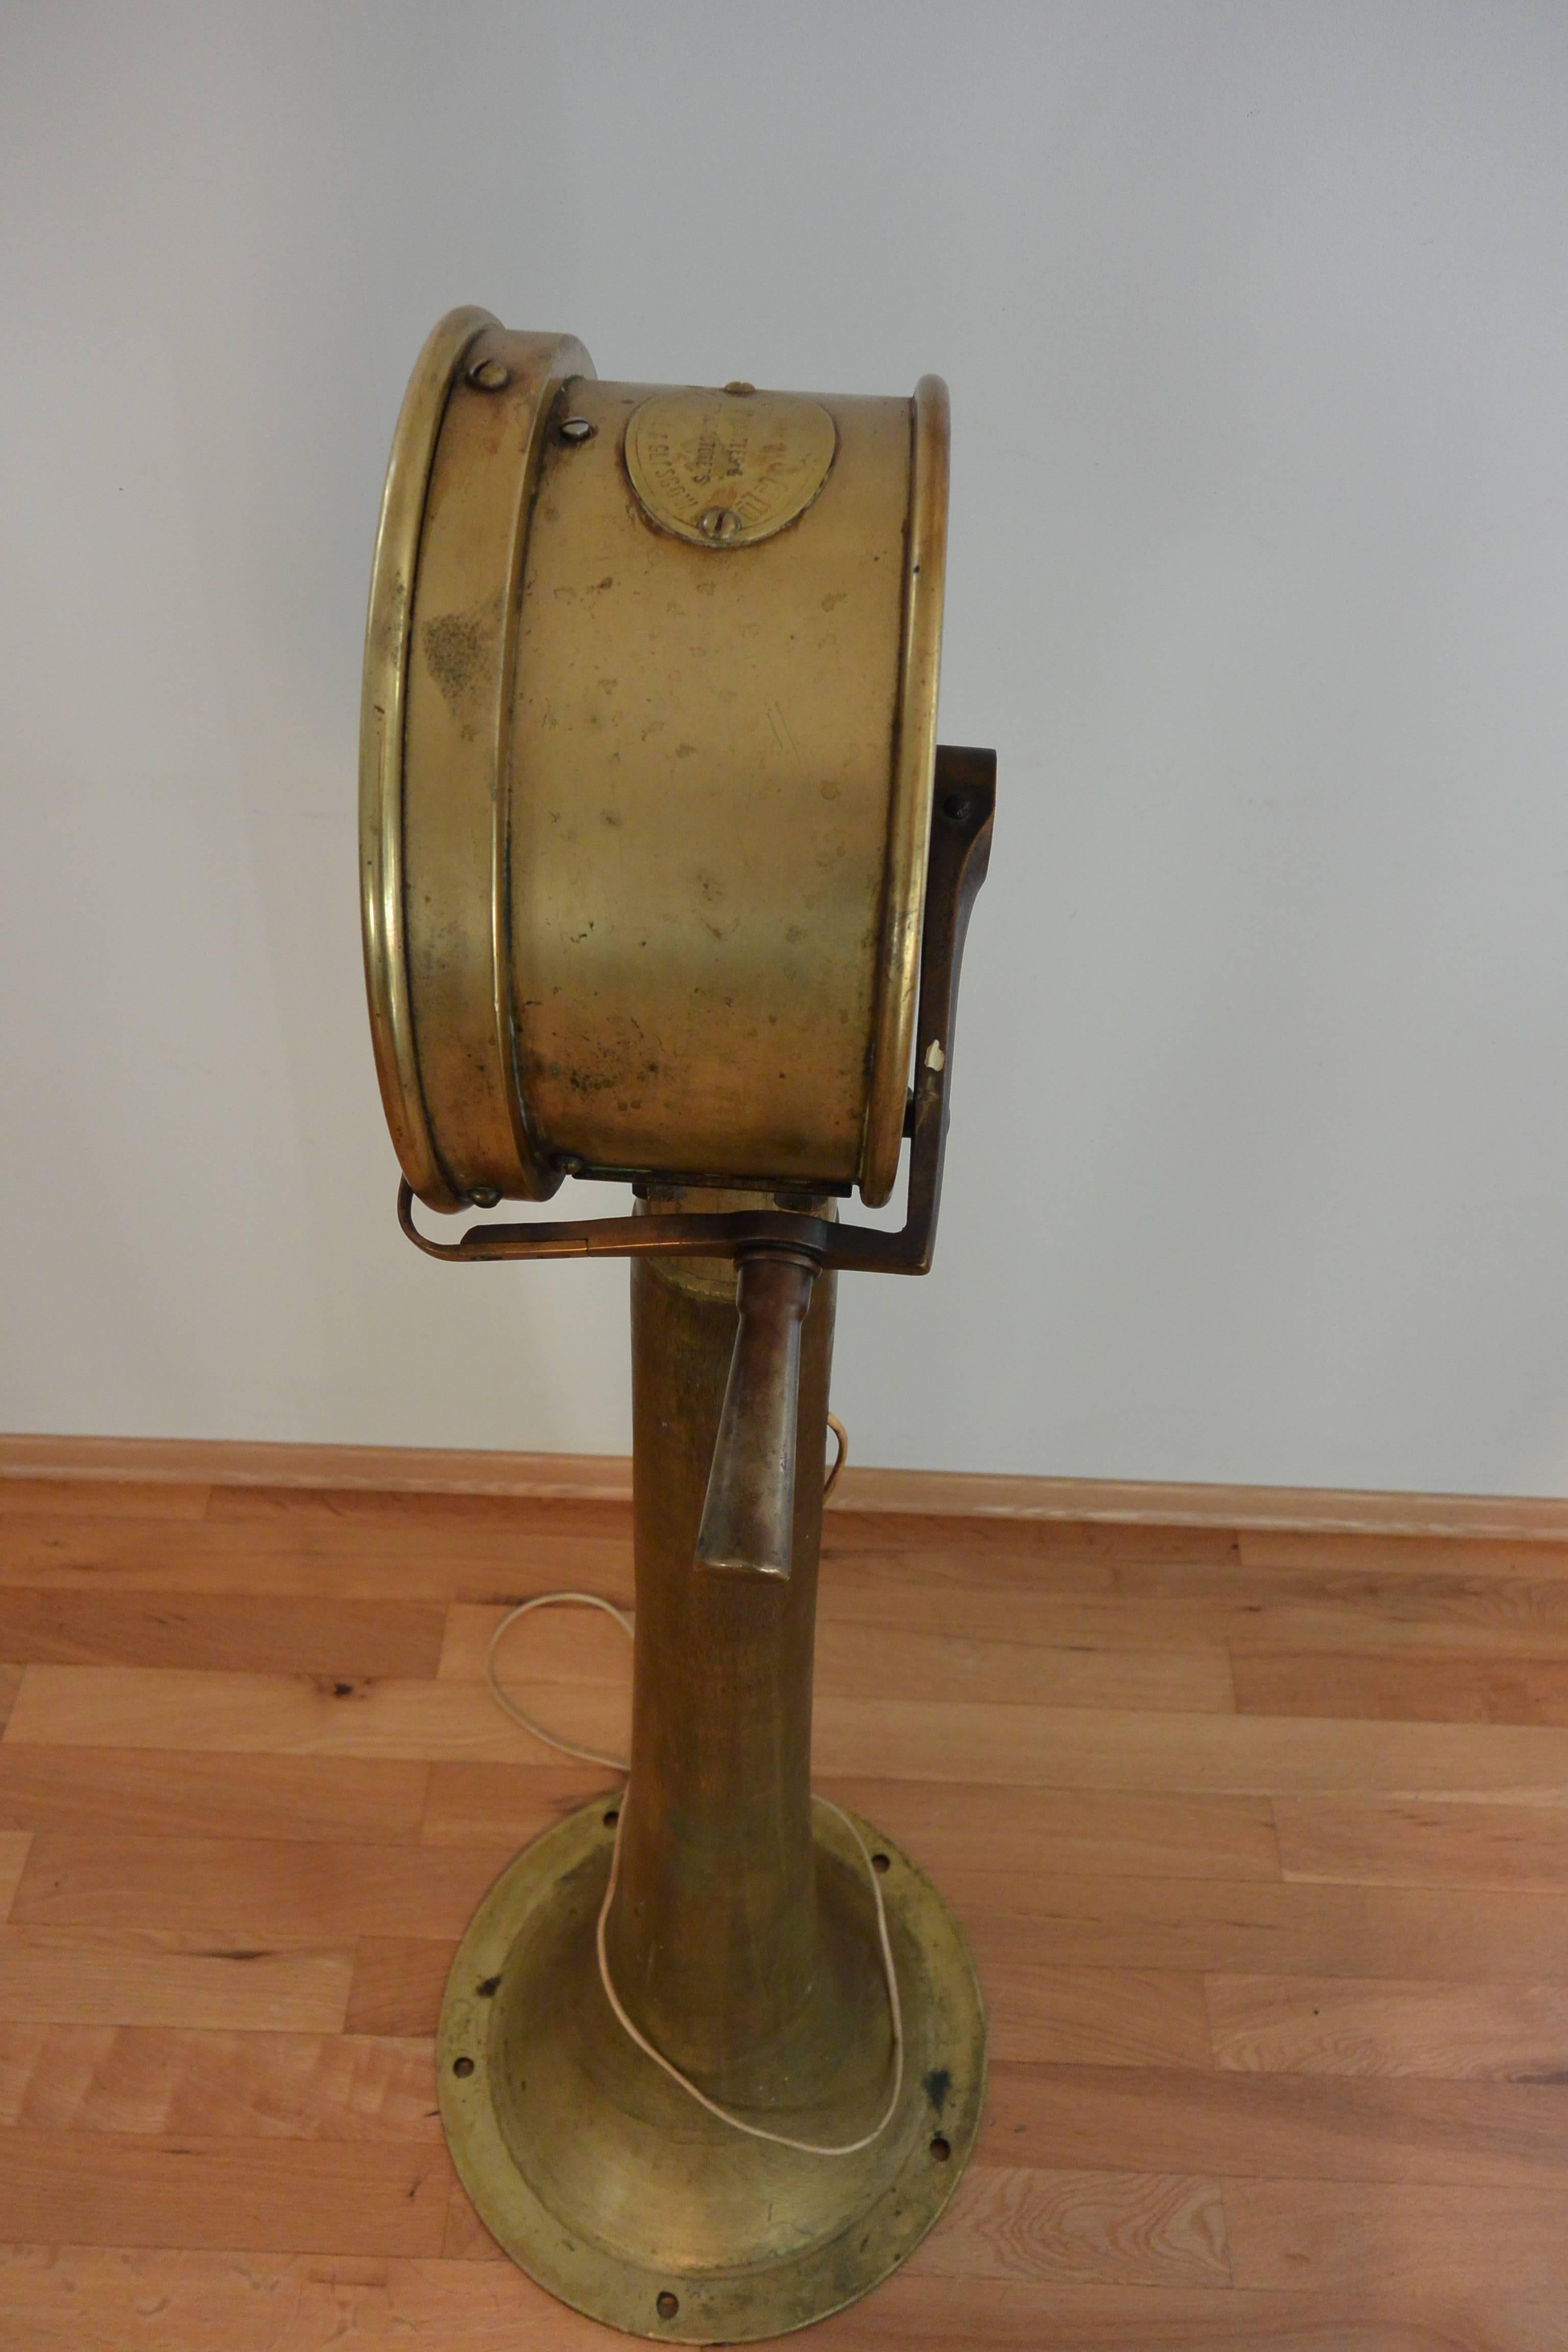 Cast Nautical Antique Ship Telegraph Instrument Brass, 1900s